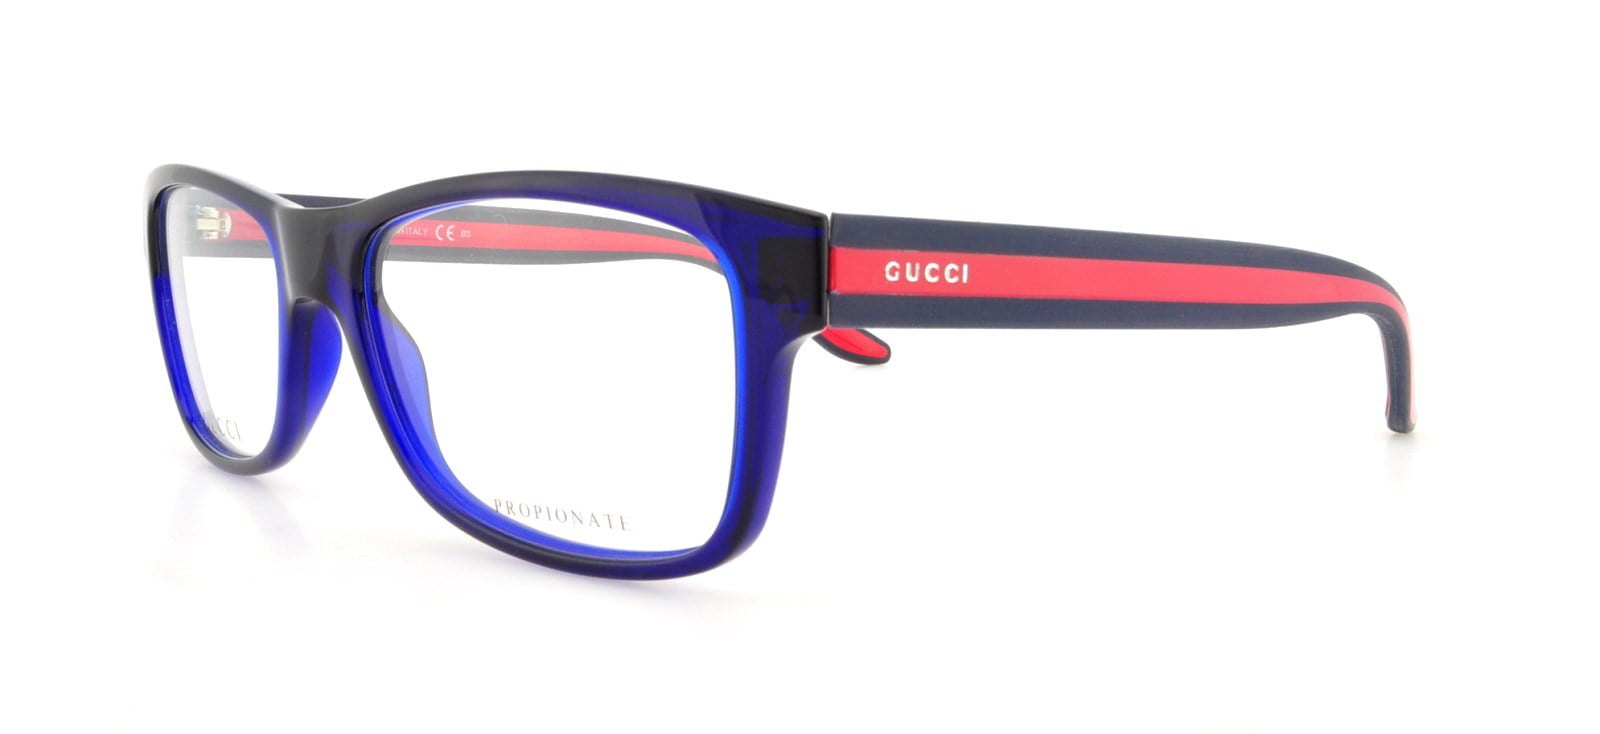 gucci eyeglasses blue